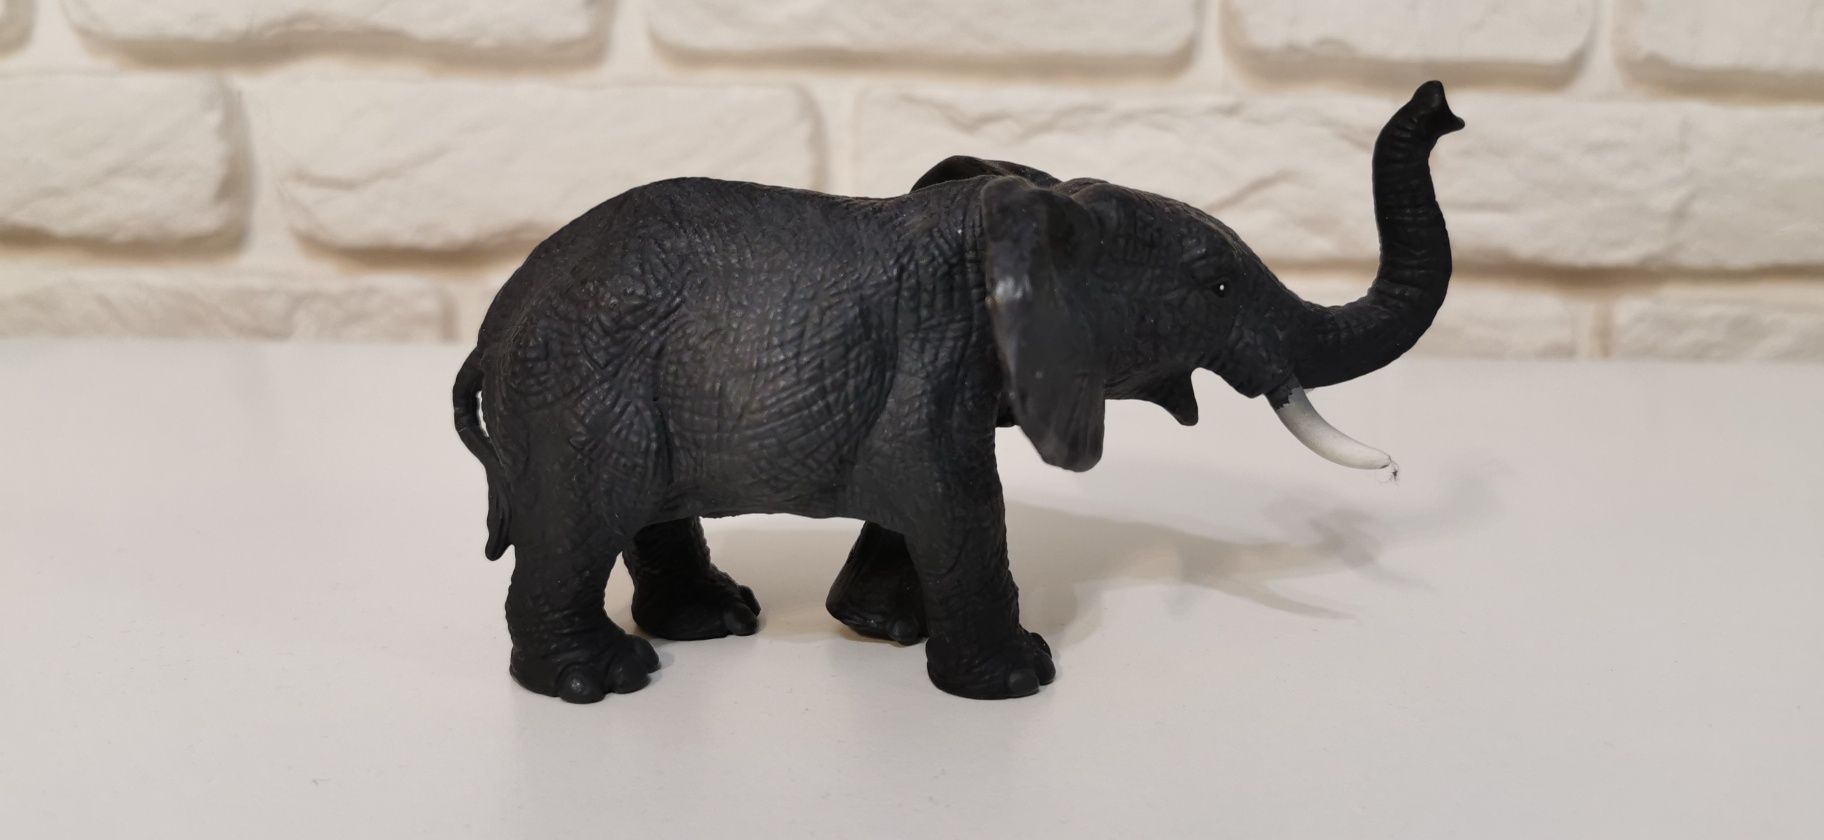 Figurka ozdobna słoń.